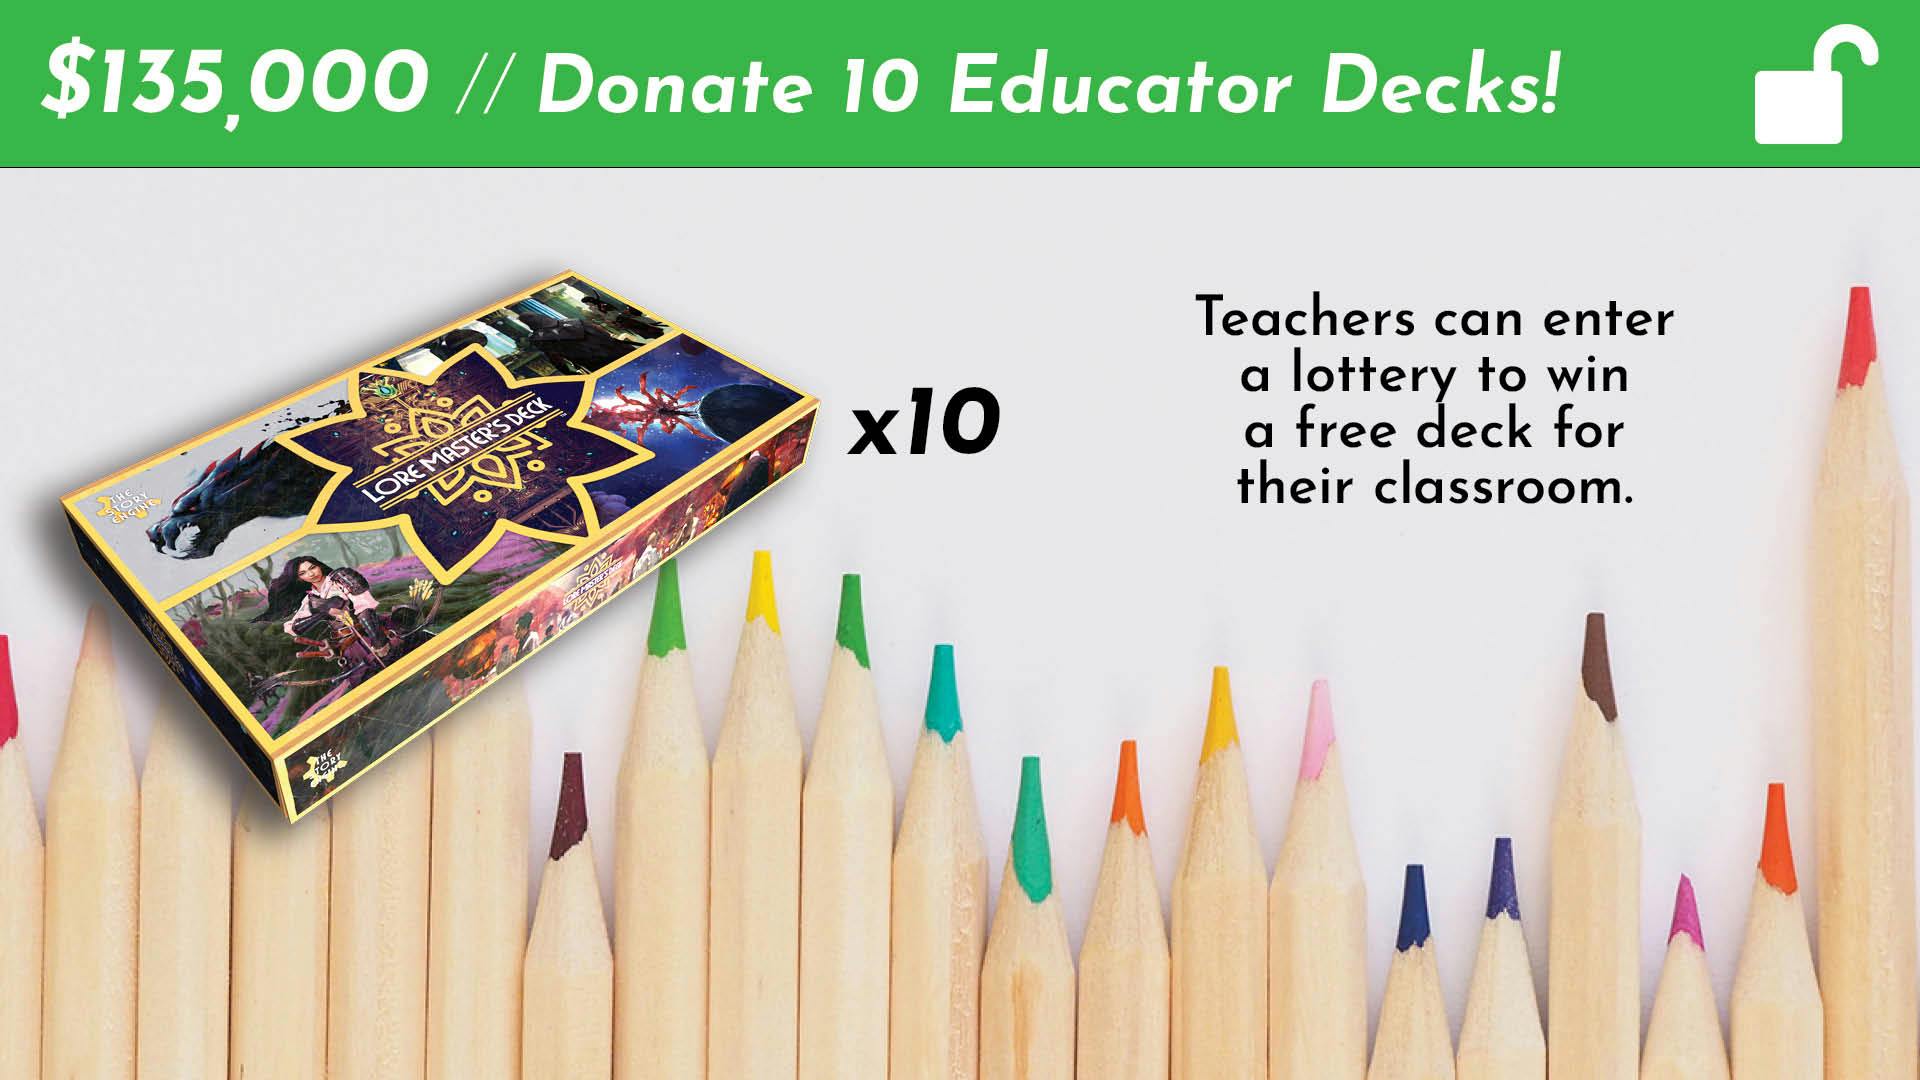 Donate 10 Decks to Educators